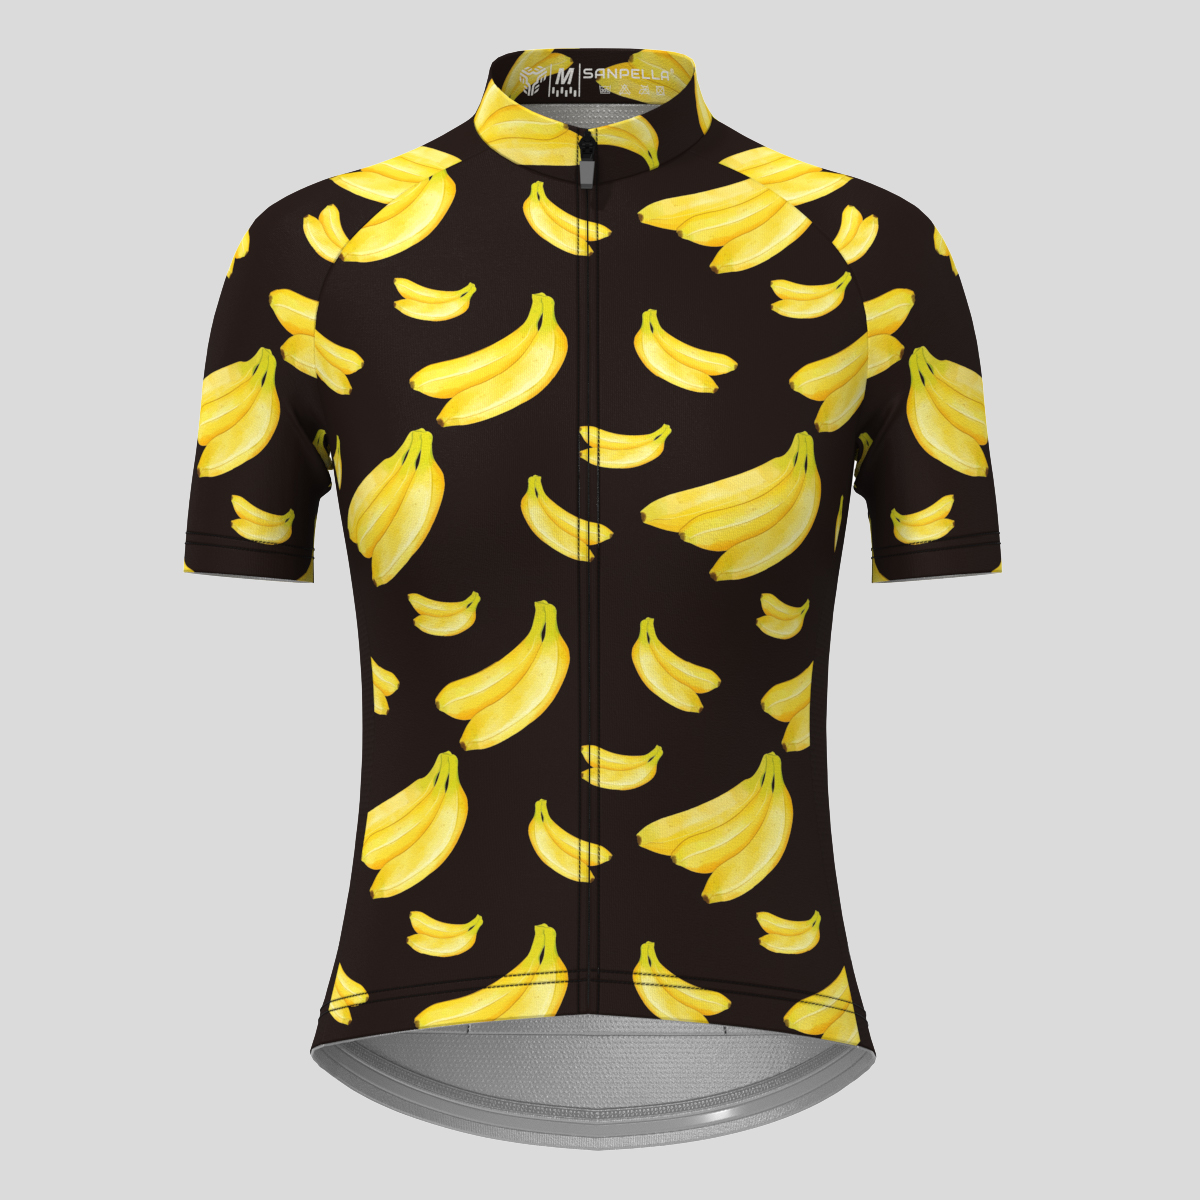 Women's Undress Me Banana Cycling Jersey - Black